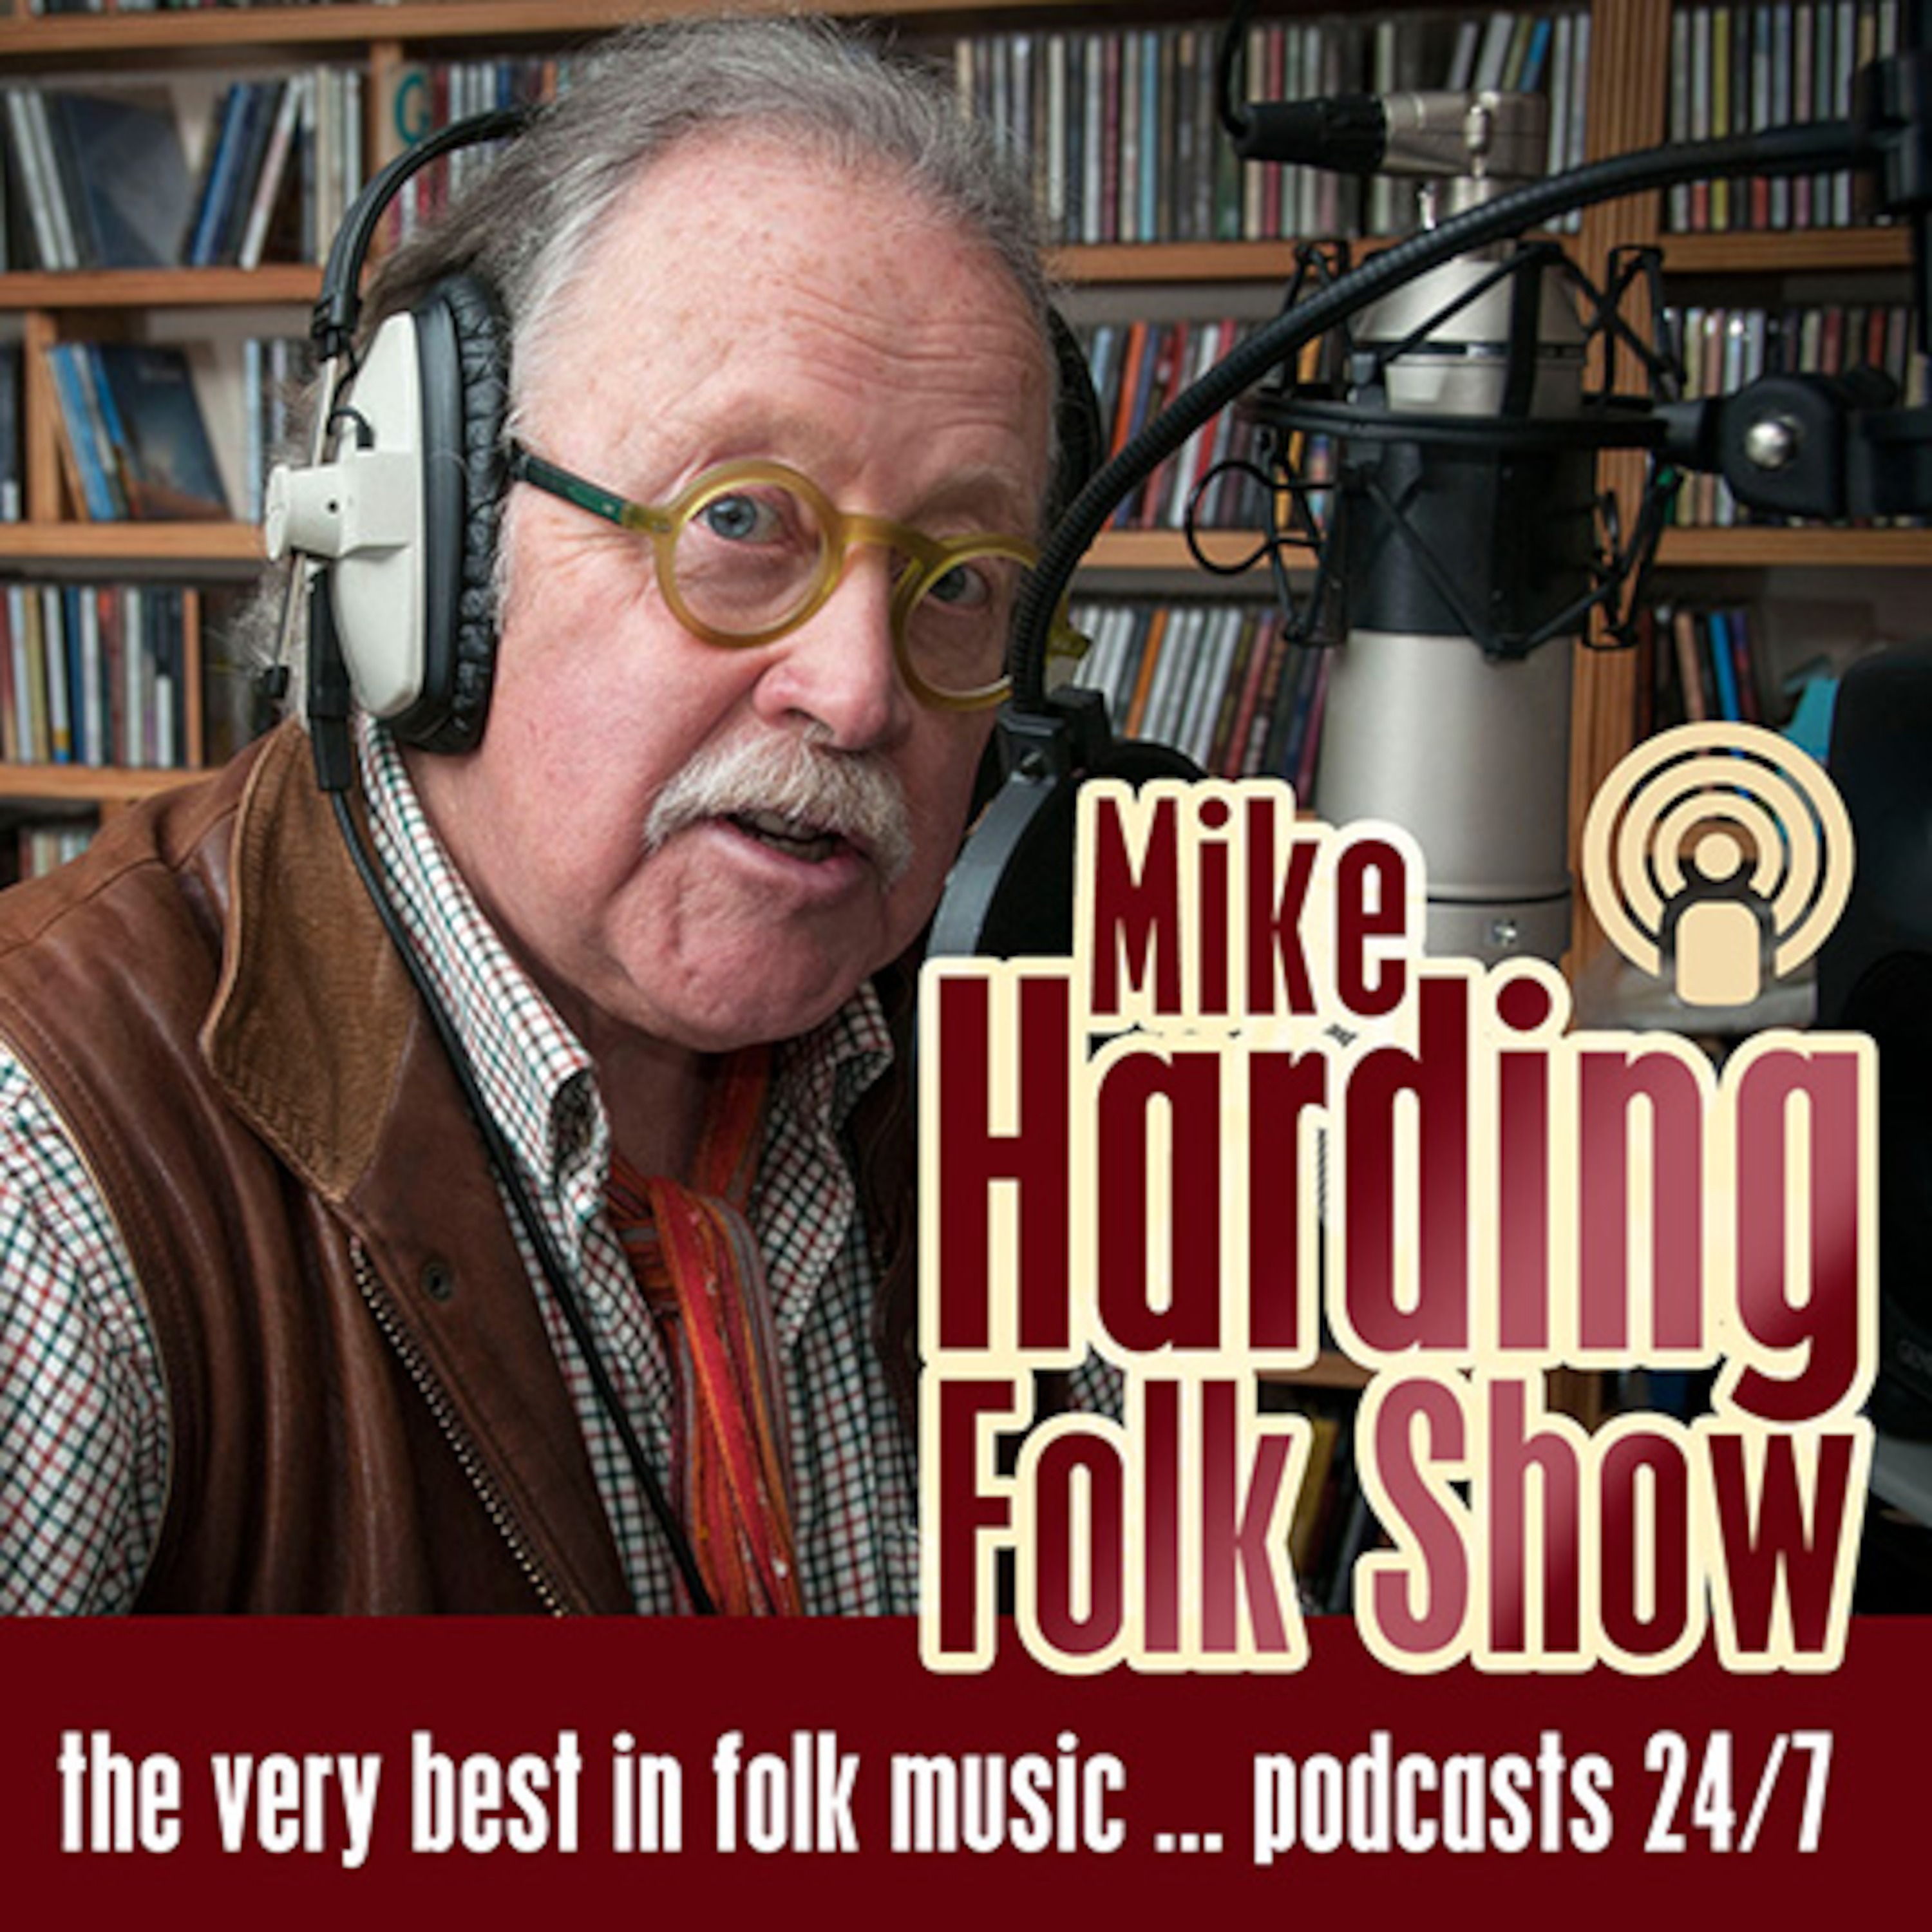 Mike Harding Folk Show 169